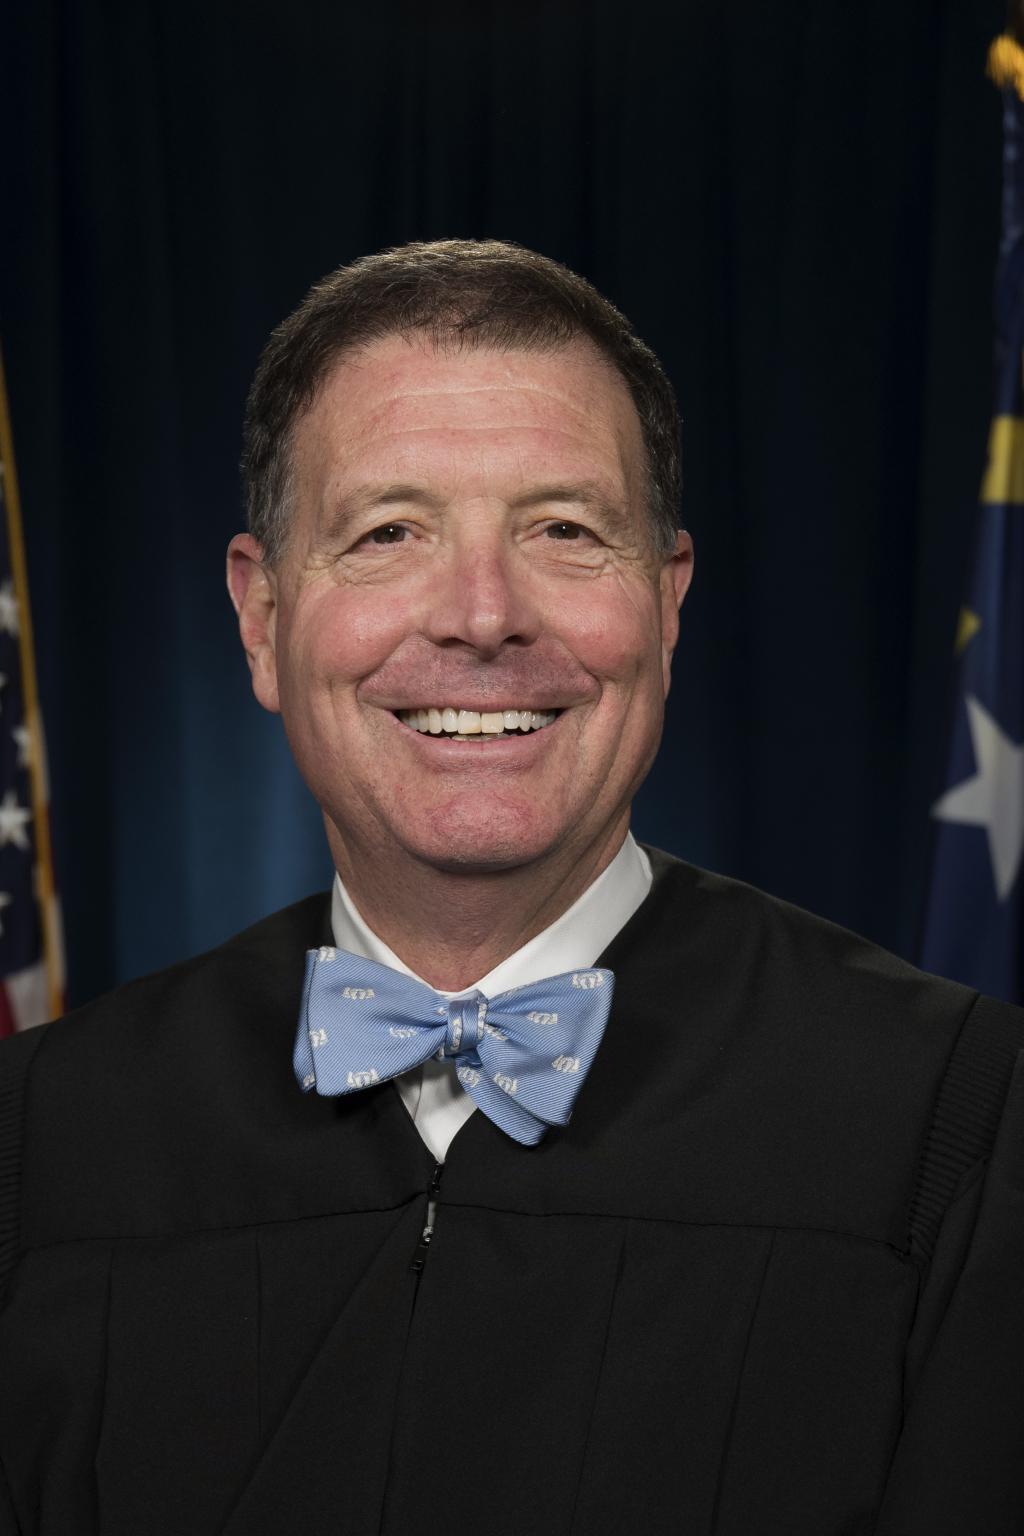 Judge Michael Robinson